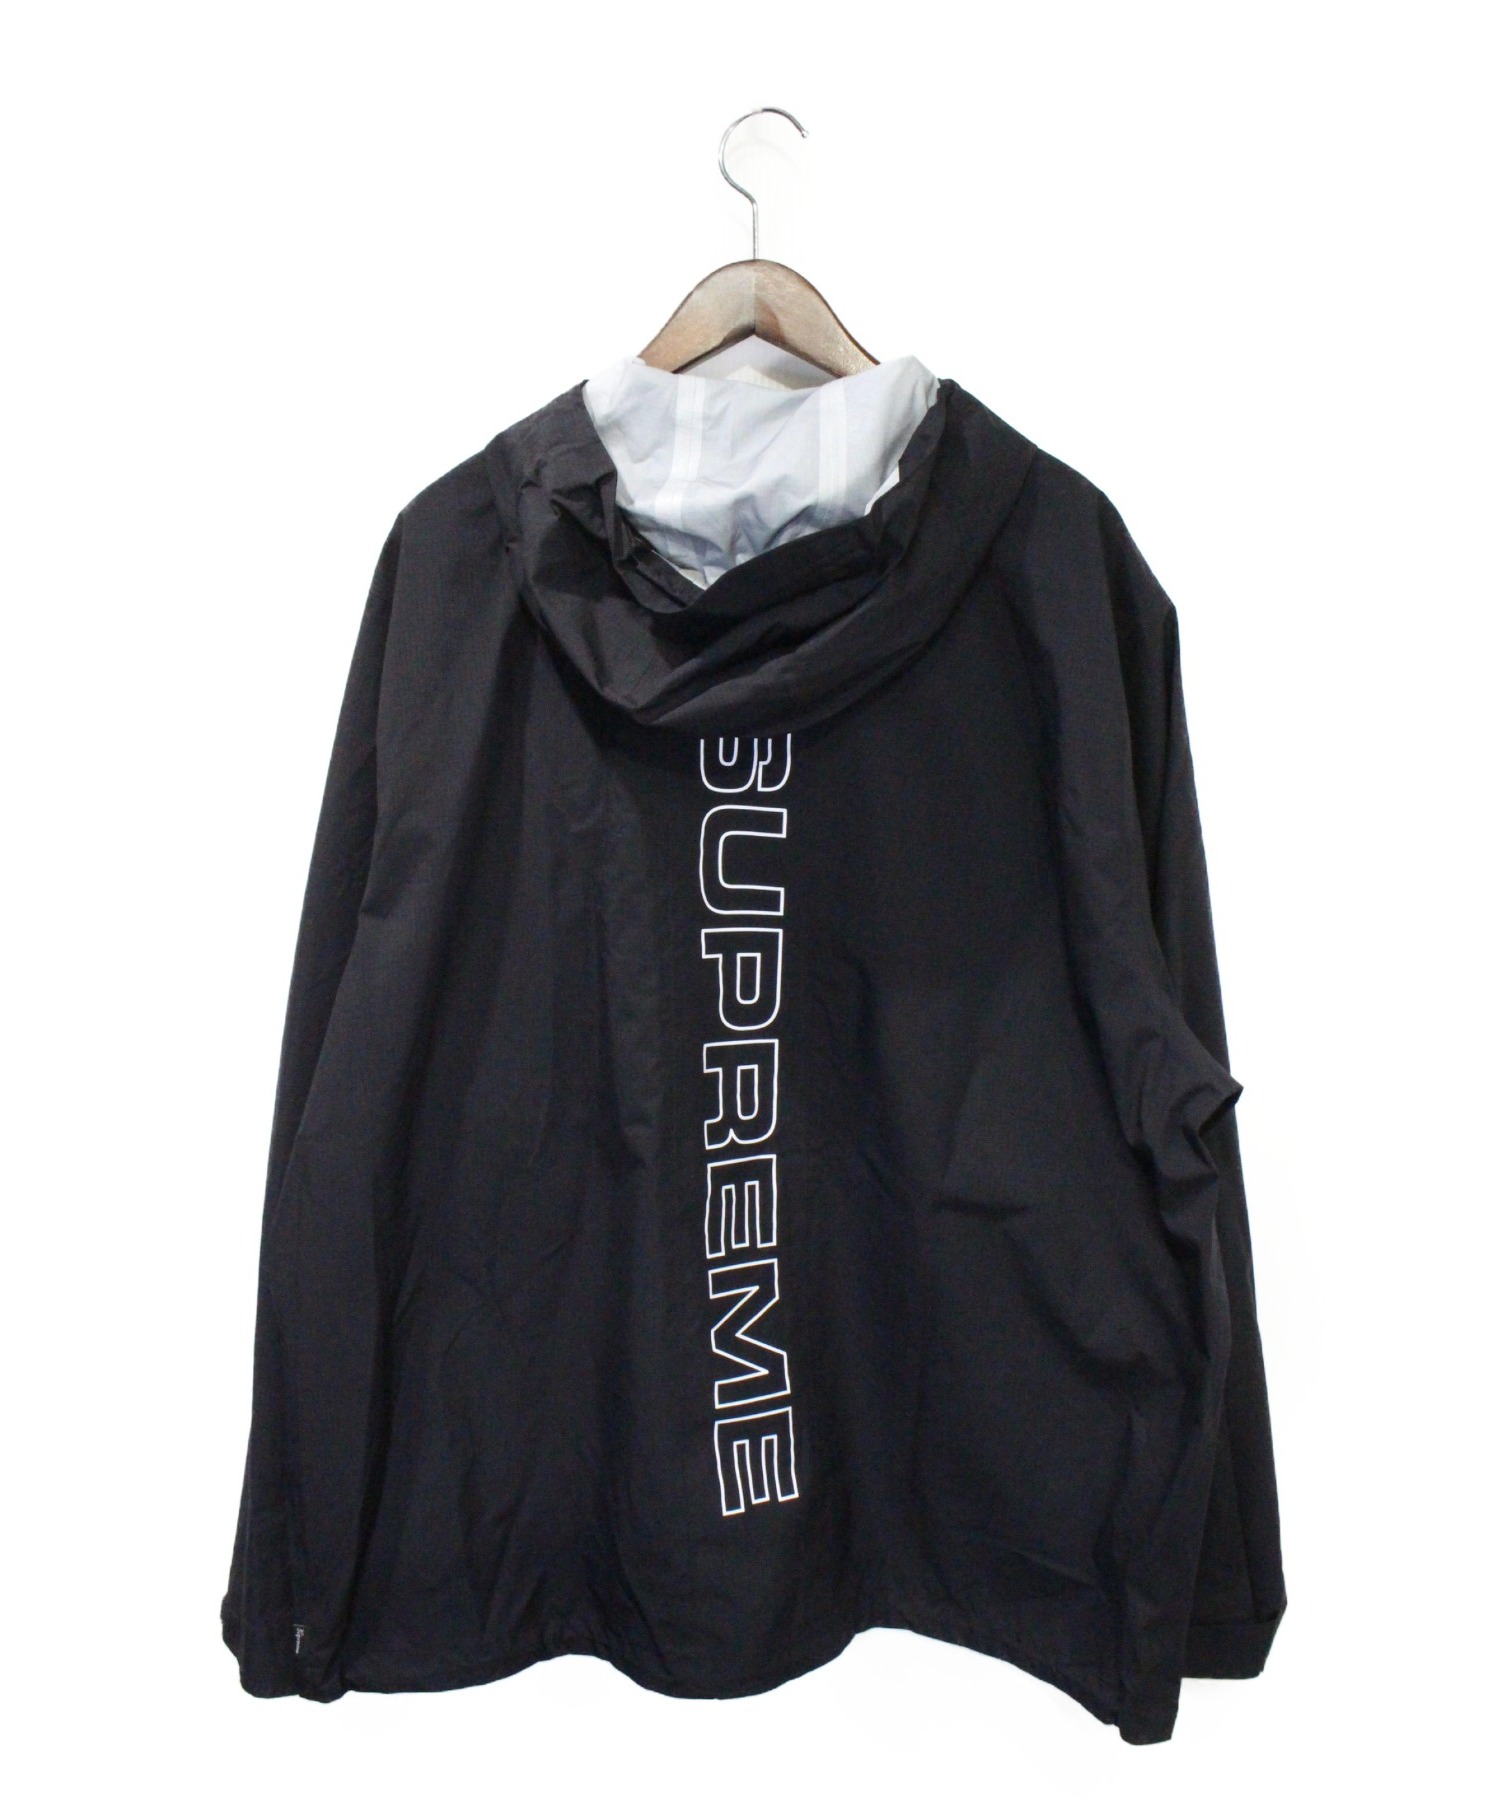 supsupreme taped seam jacket 18ss 定価55,000円